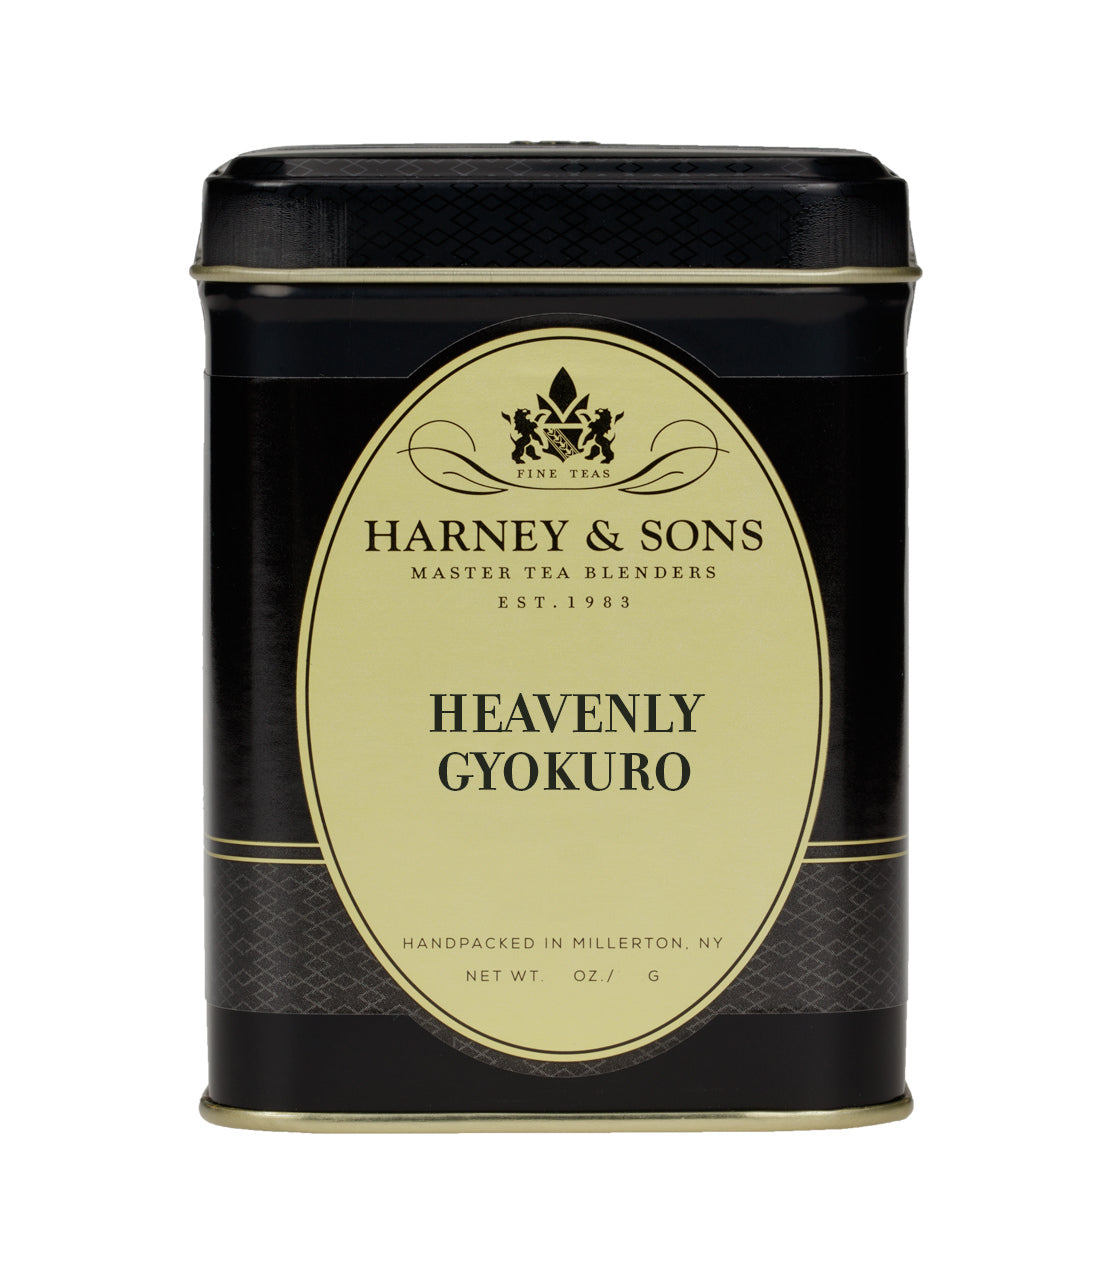 Heavenly Gyokuro - Loose 2 oz. Tin - Harney & Sons Fine Teas